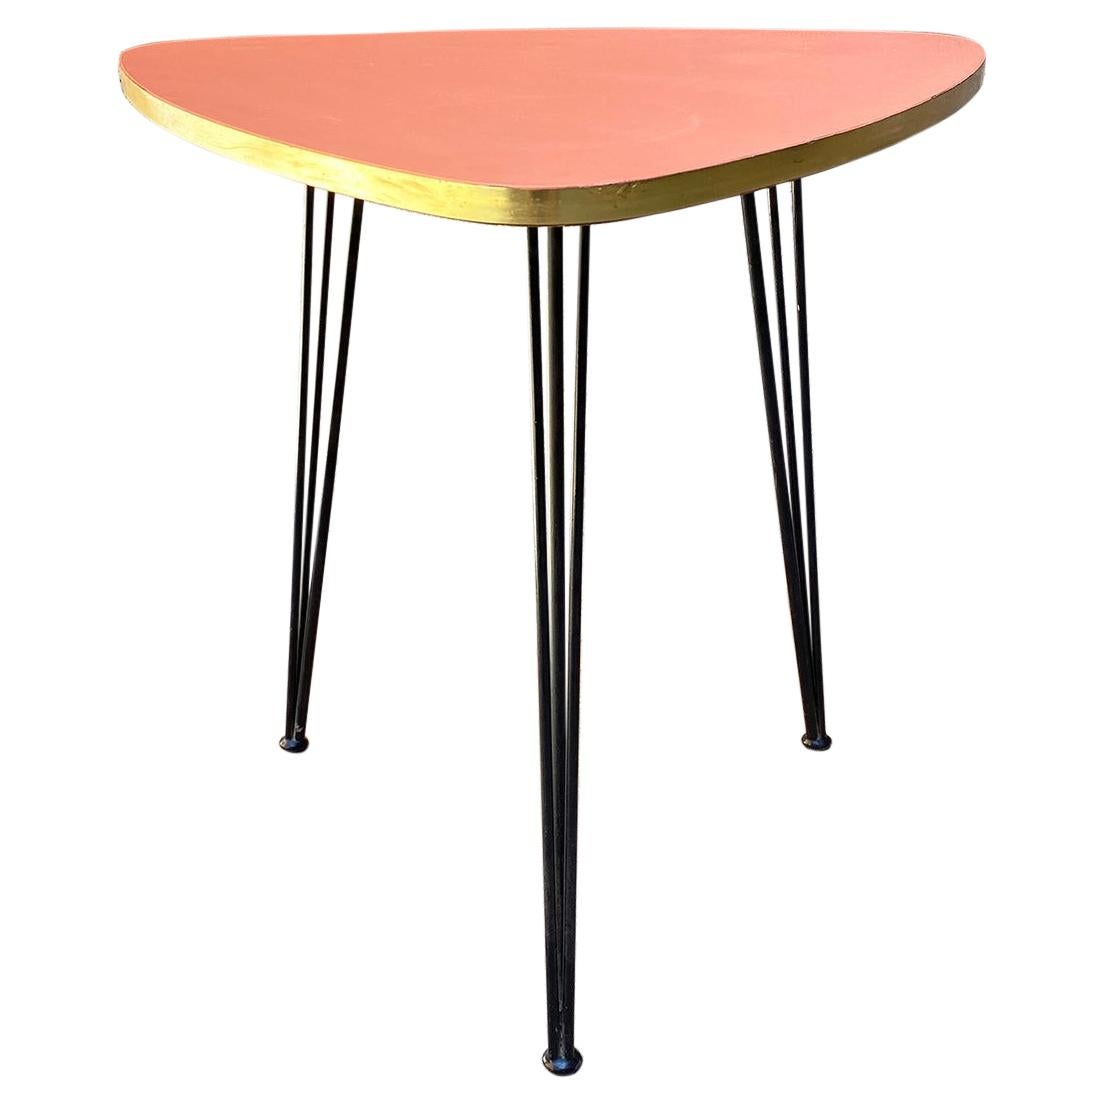 Italian Mid-Century Modern Pink Coffee Table with Metal Rod, 1960s